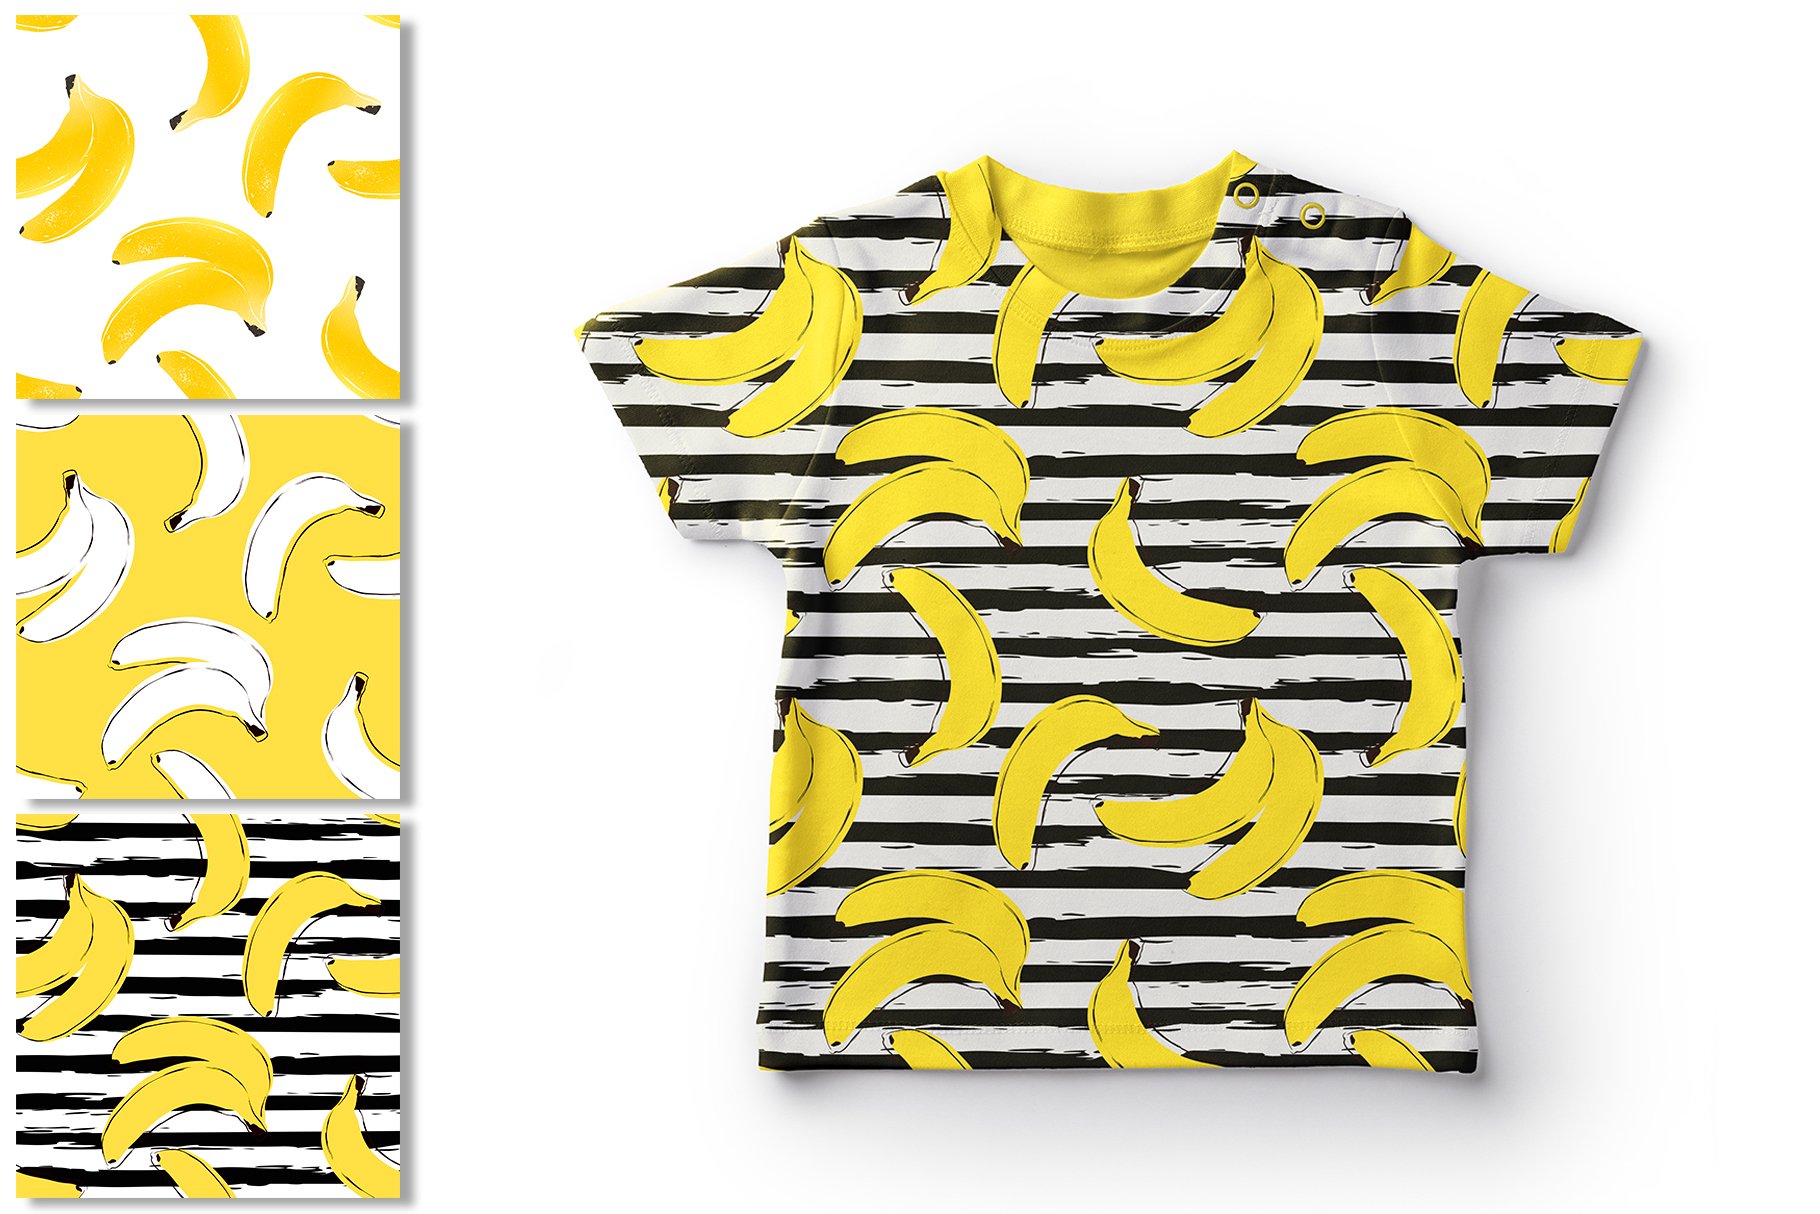 Fruit patterns. Sweet yellow bananas preview image.